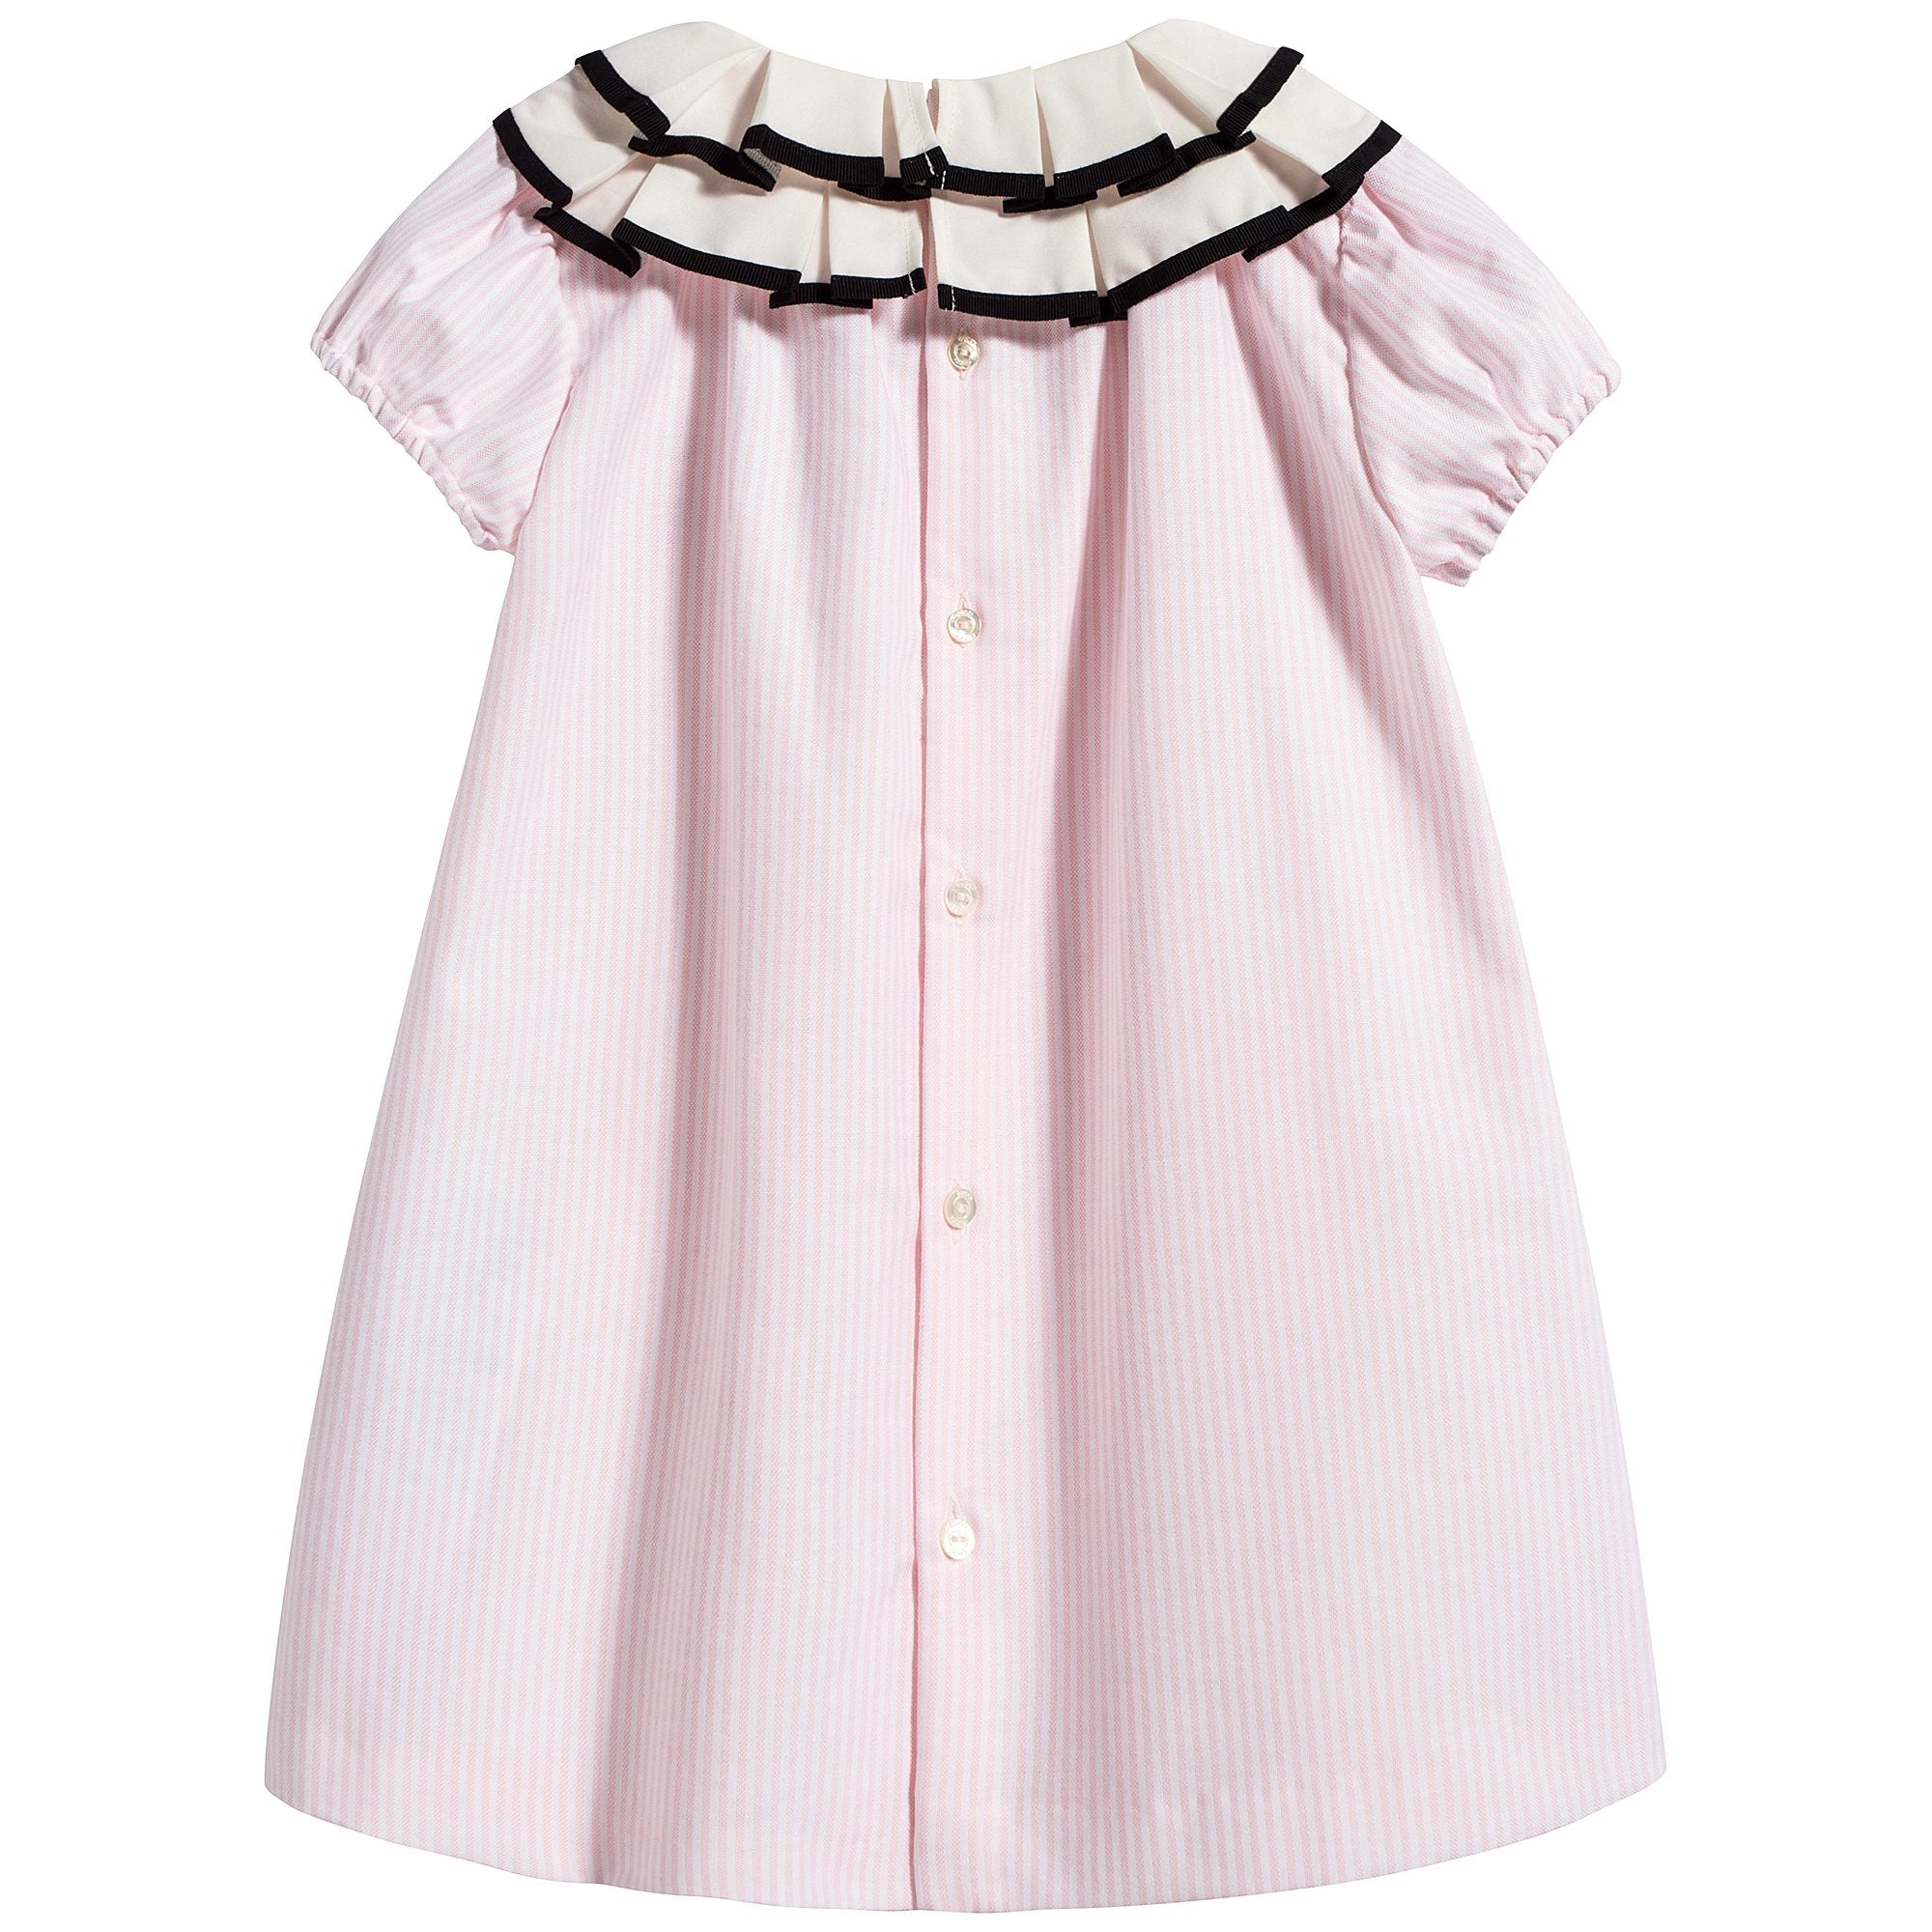 Baby Girls White & Light Pink Striped Dress